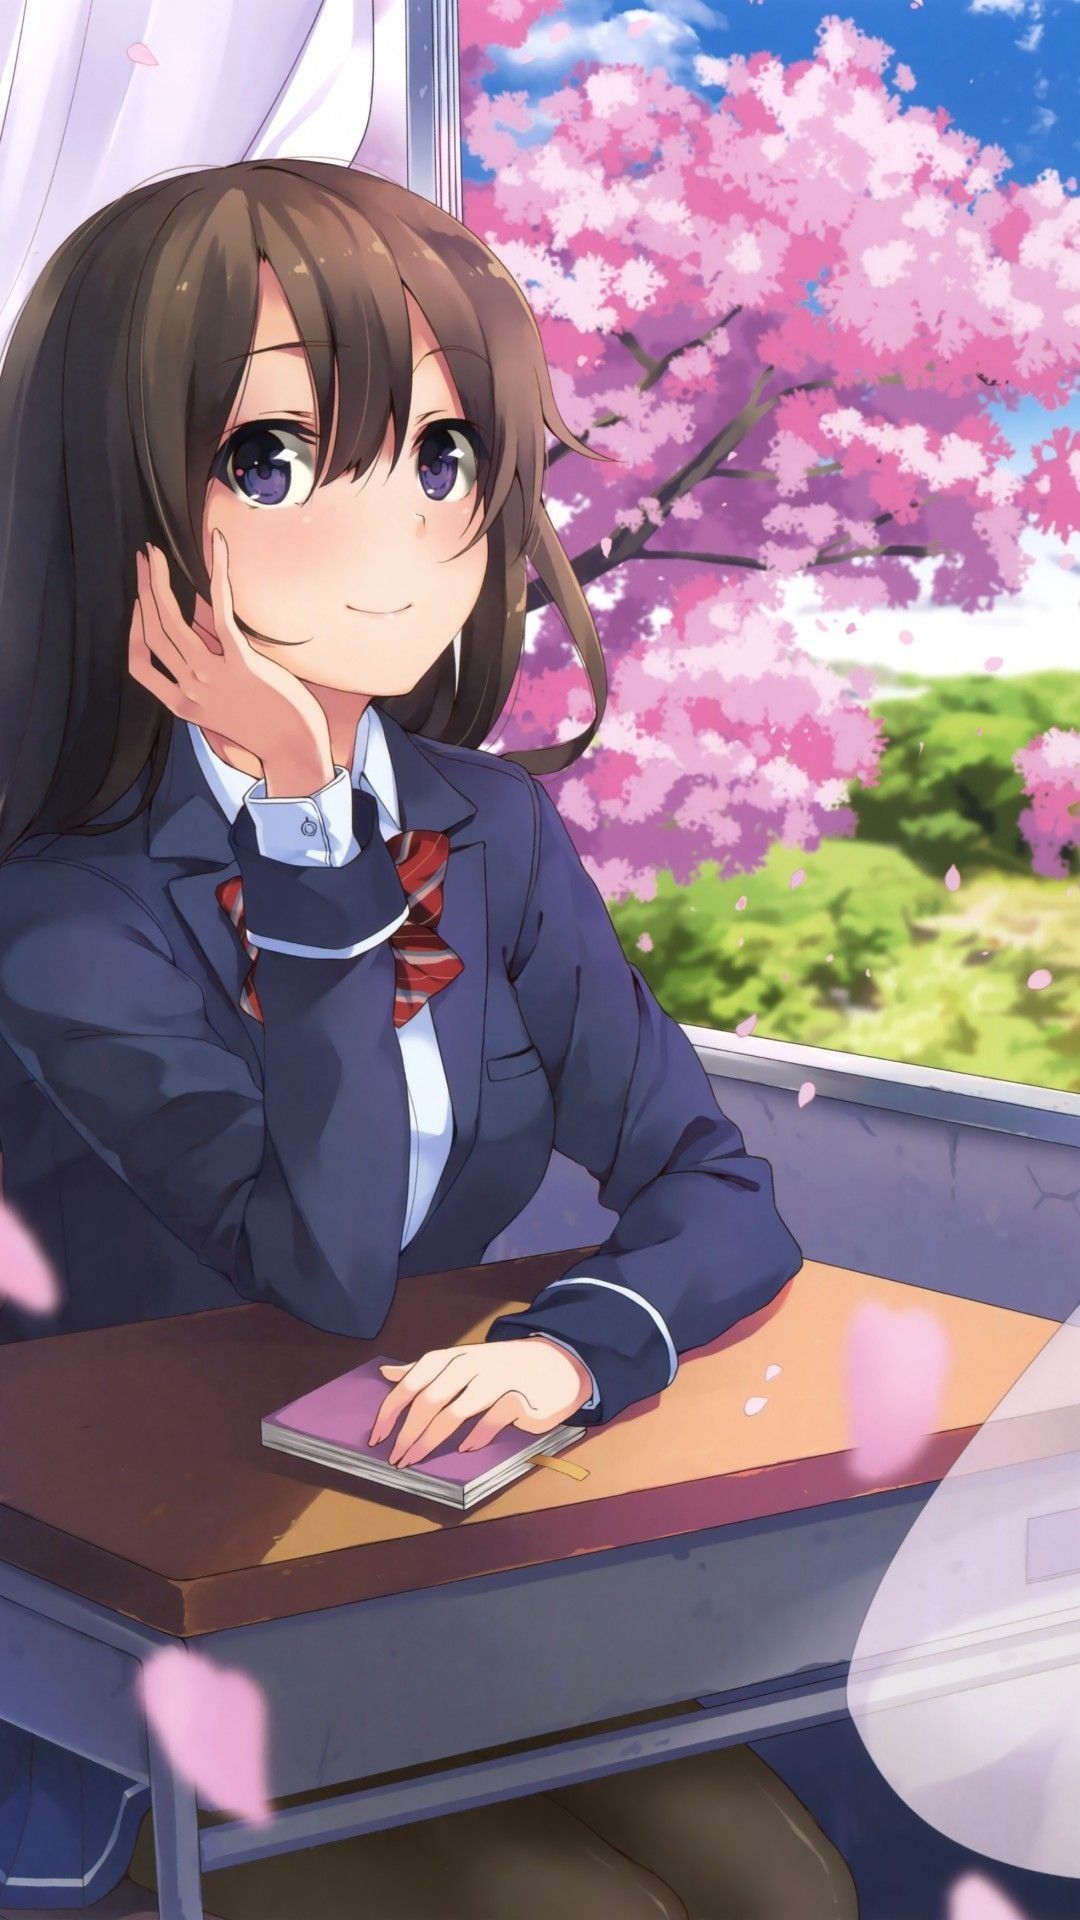 Cute Anime School Girl Wallpaperwalpaperlist.com